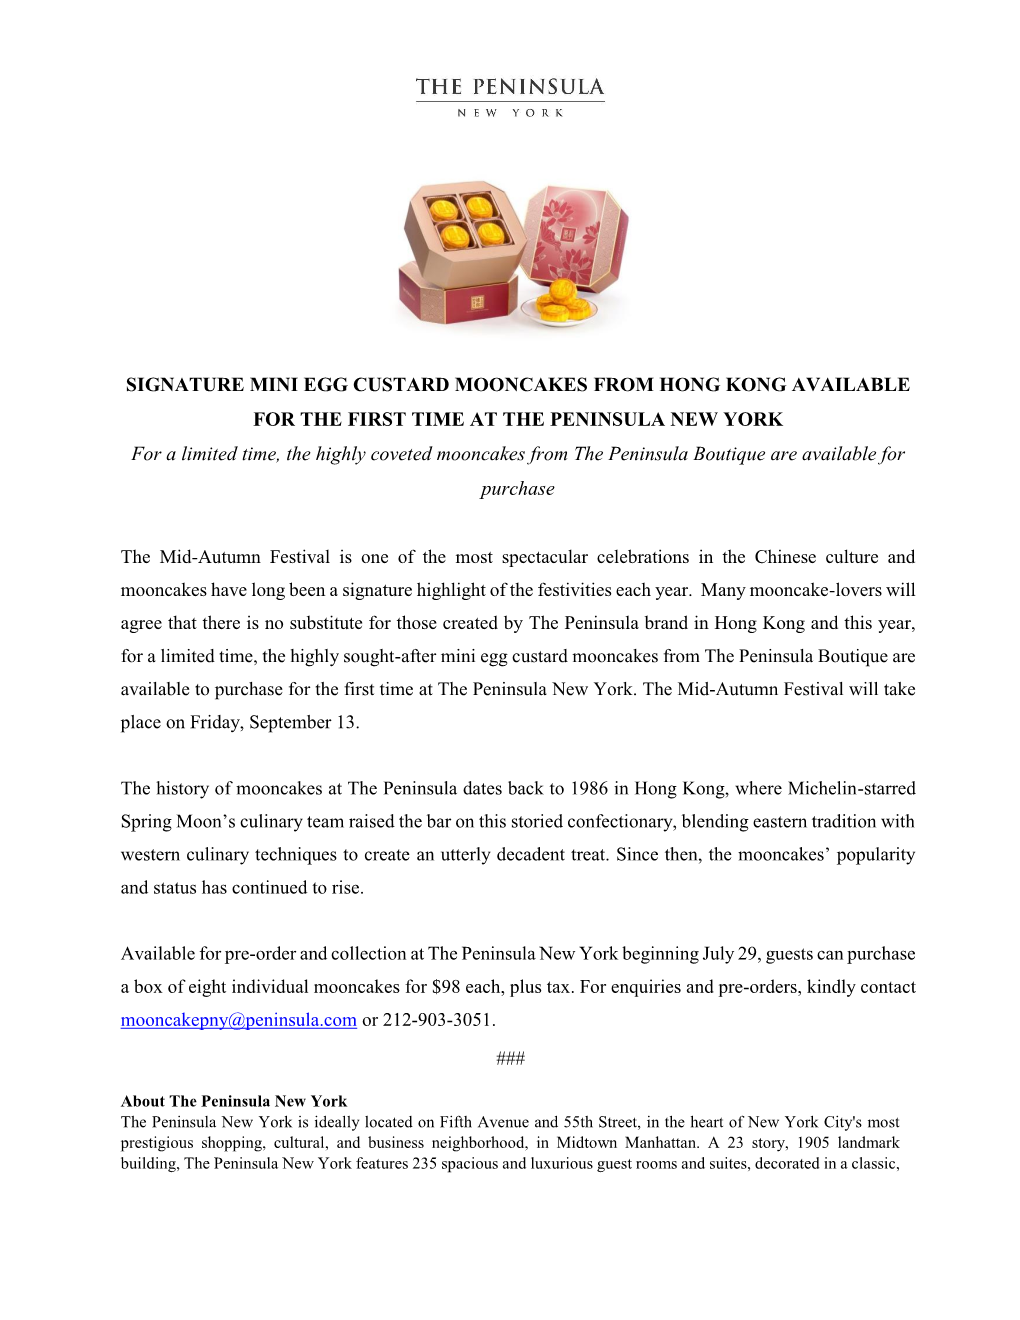 Signature Mini Egg Custard Mooncakes from Hong Kong Available